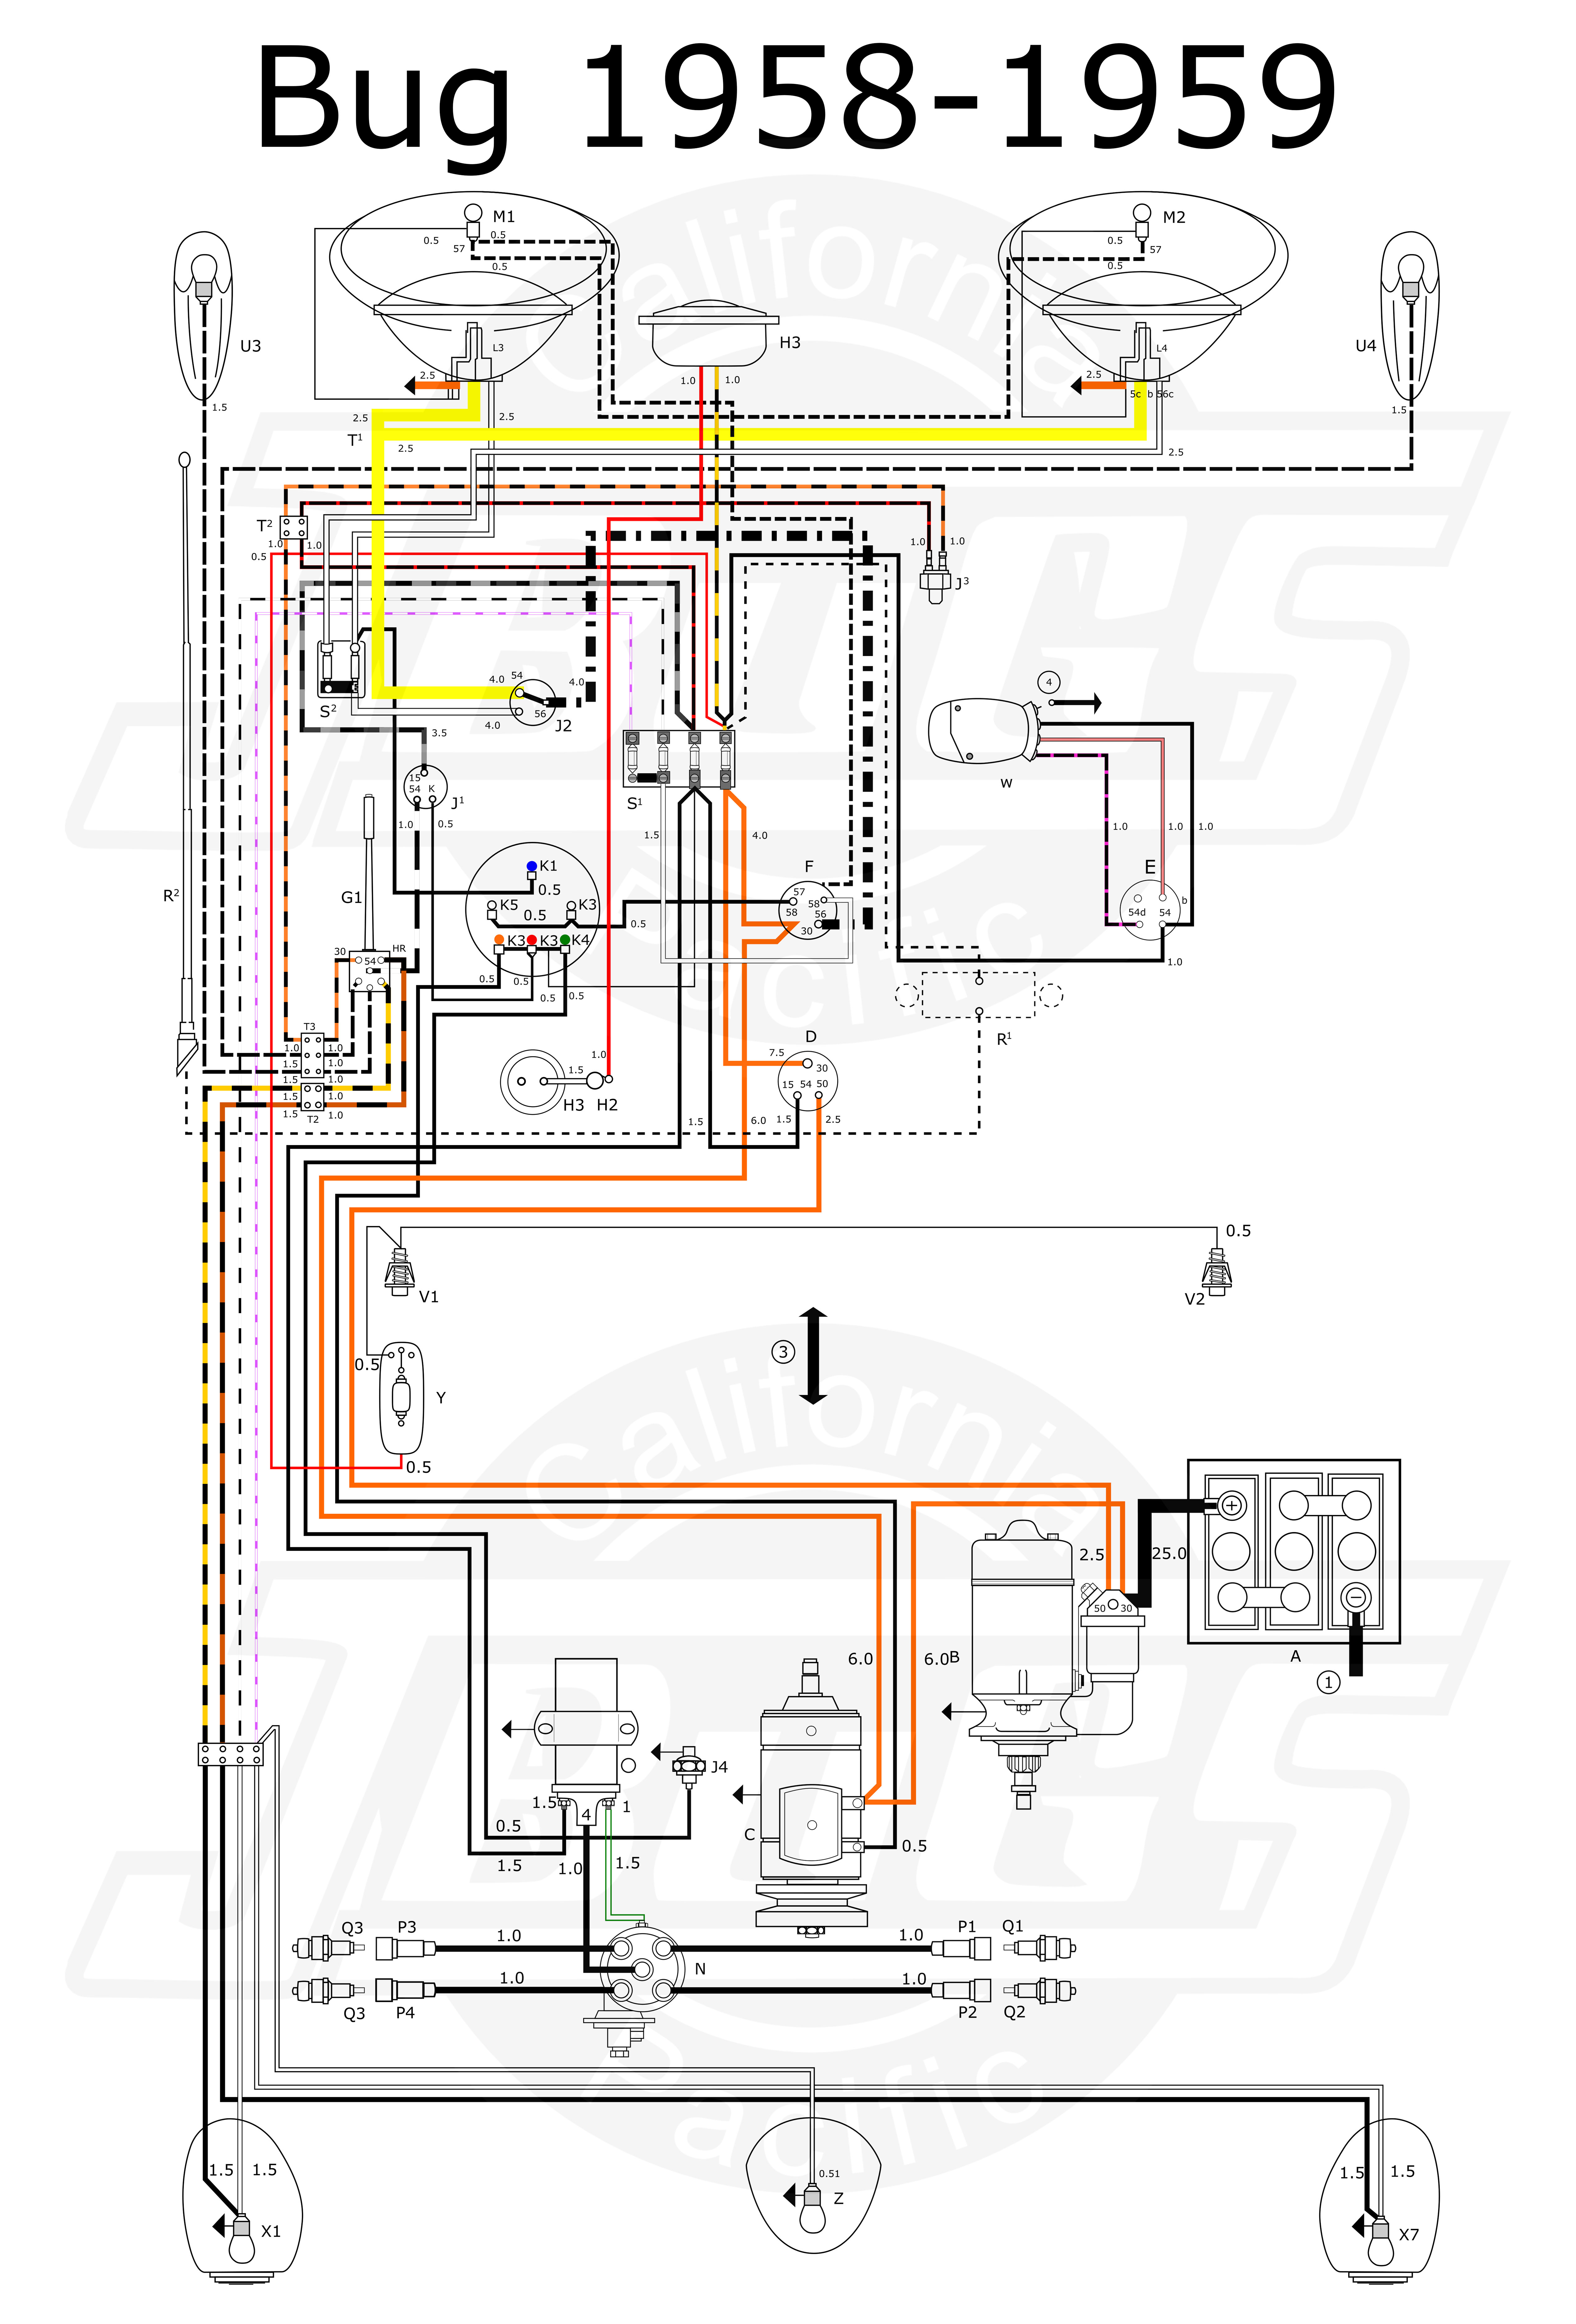 VW Tech Article 1958-59 Wiring Diagram  Electrical Wiring Diagram 1963 Vw Beetle Standard    JBugs